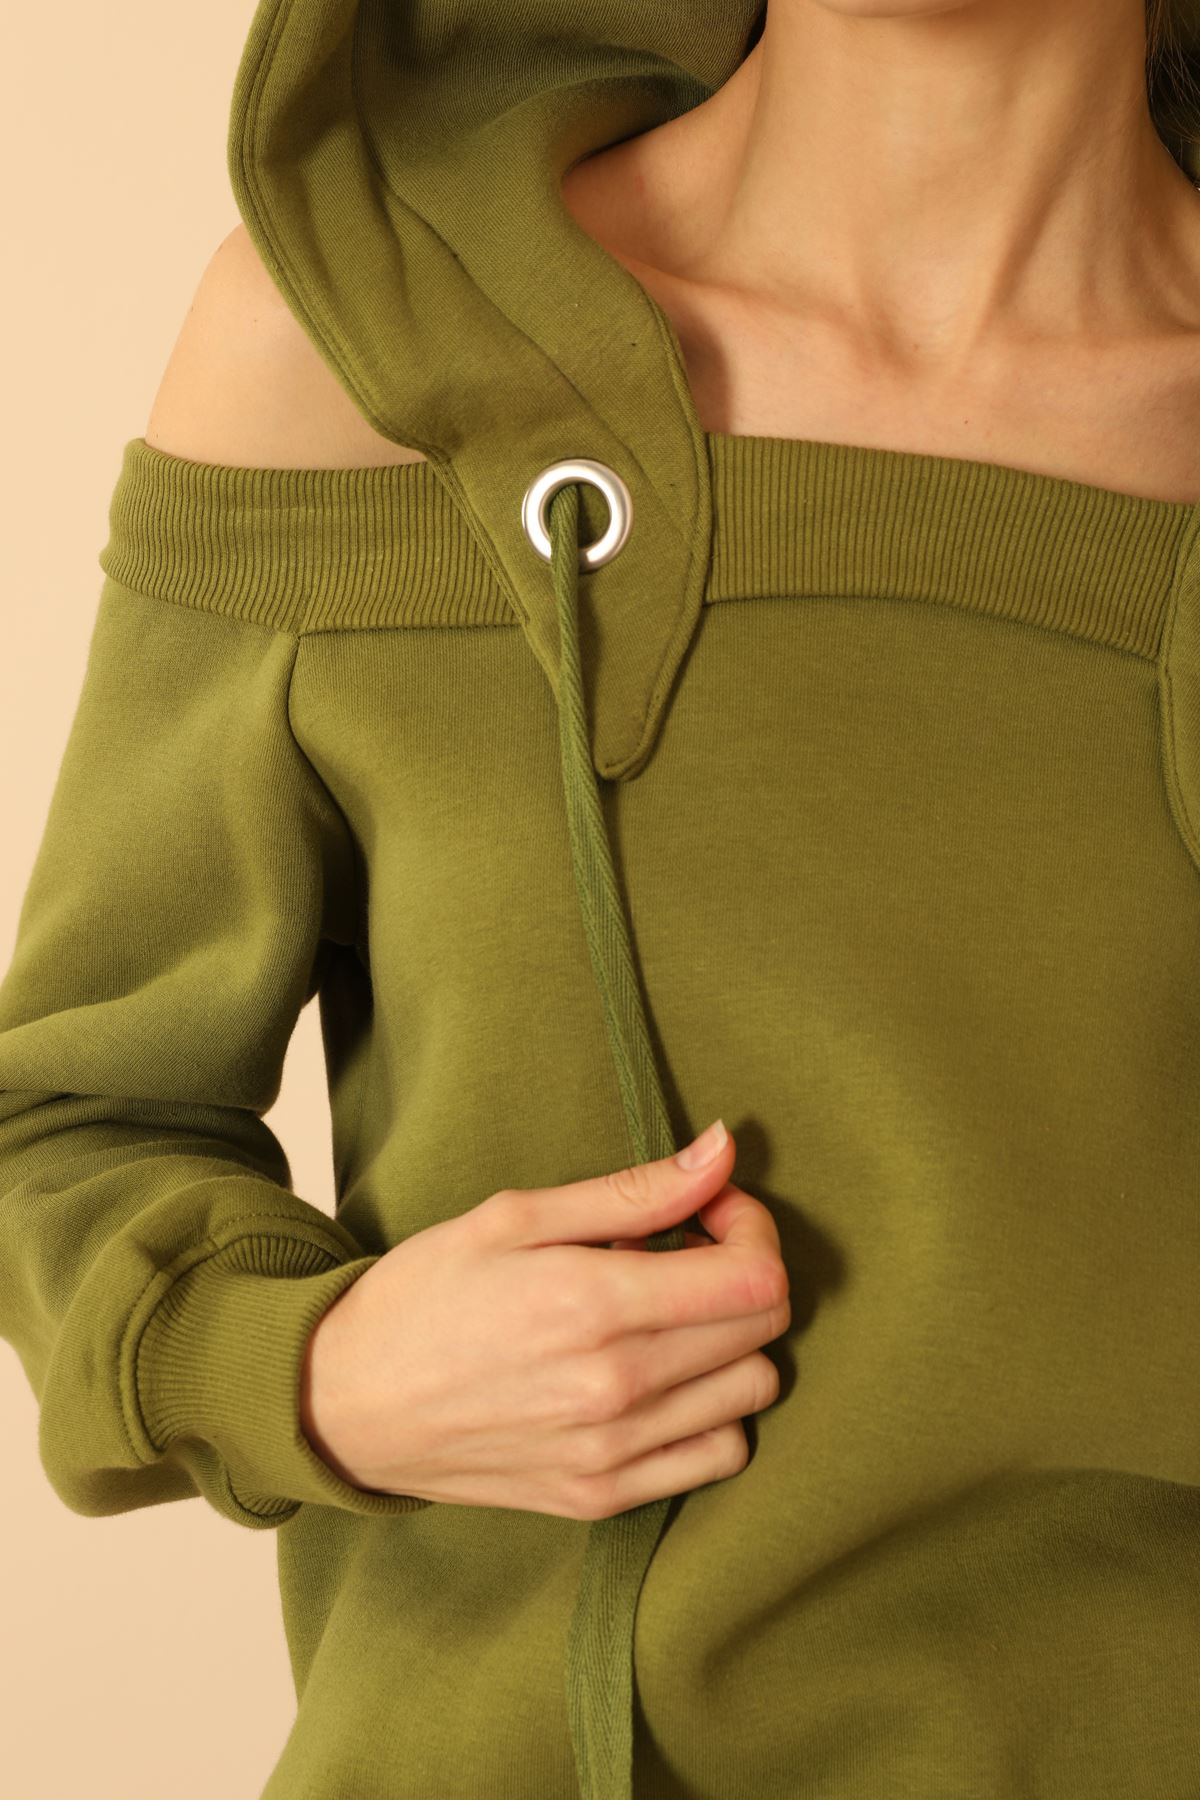 Third Knit With Wool İnside Fabric Hooded Hip Height Shoulder Detailed Women Sweatshirt - Khaki 